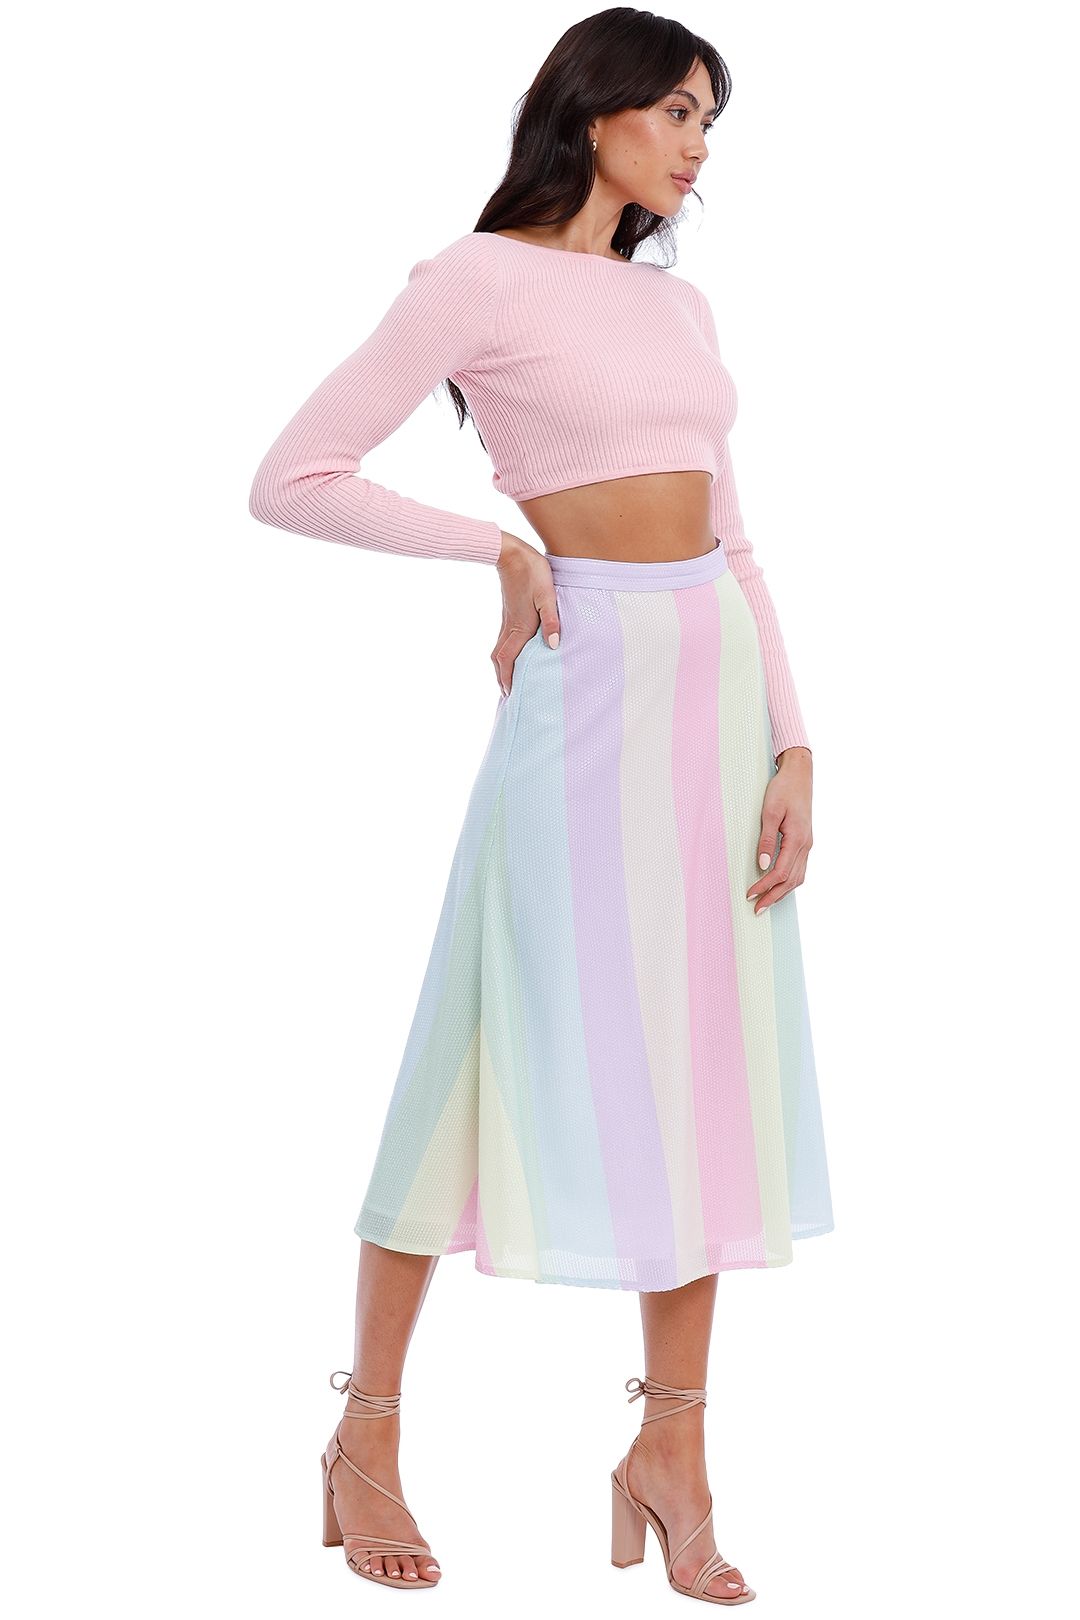 Olivia Rubin Neapolitan Skirt Ombre Midi Length